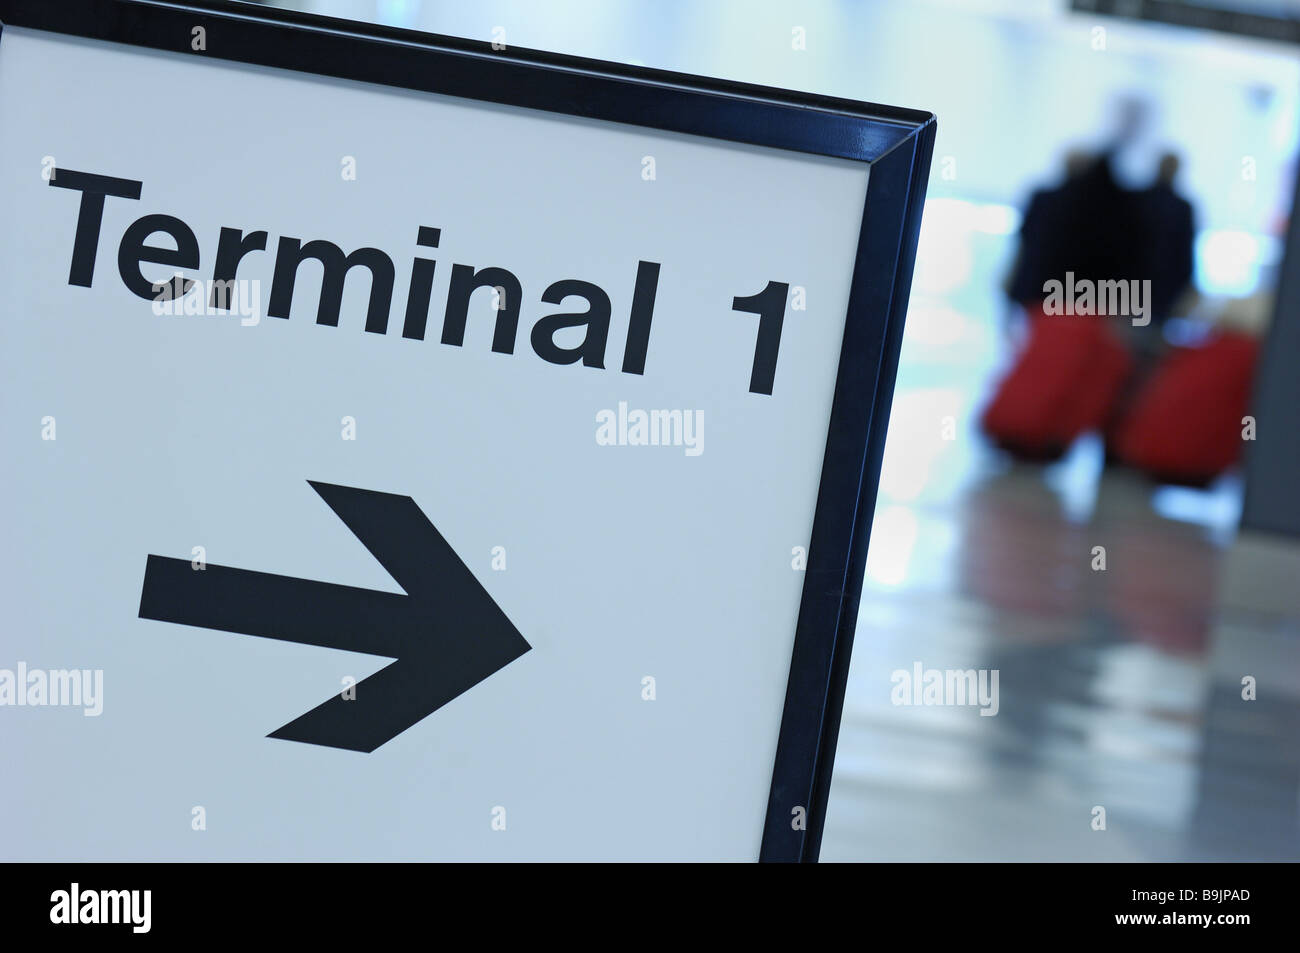 Airport sign terminal 1 arrow direction Stock Photo